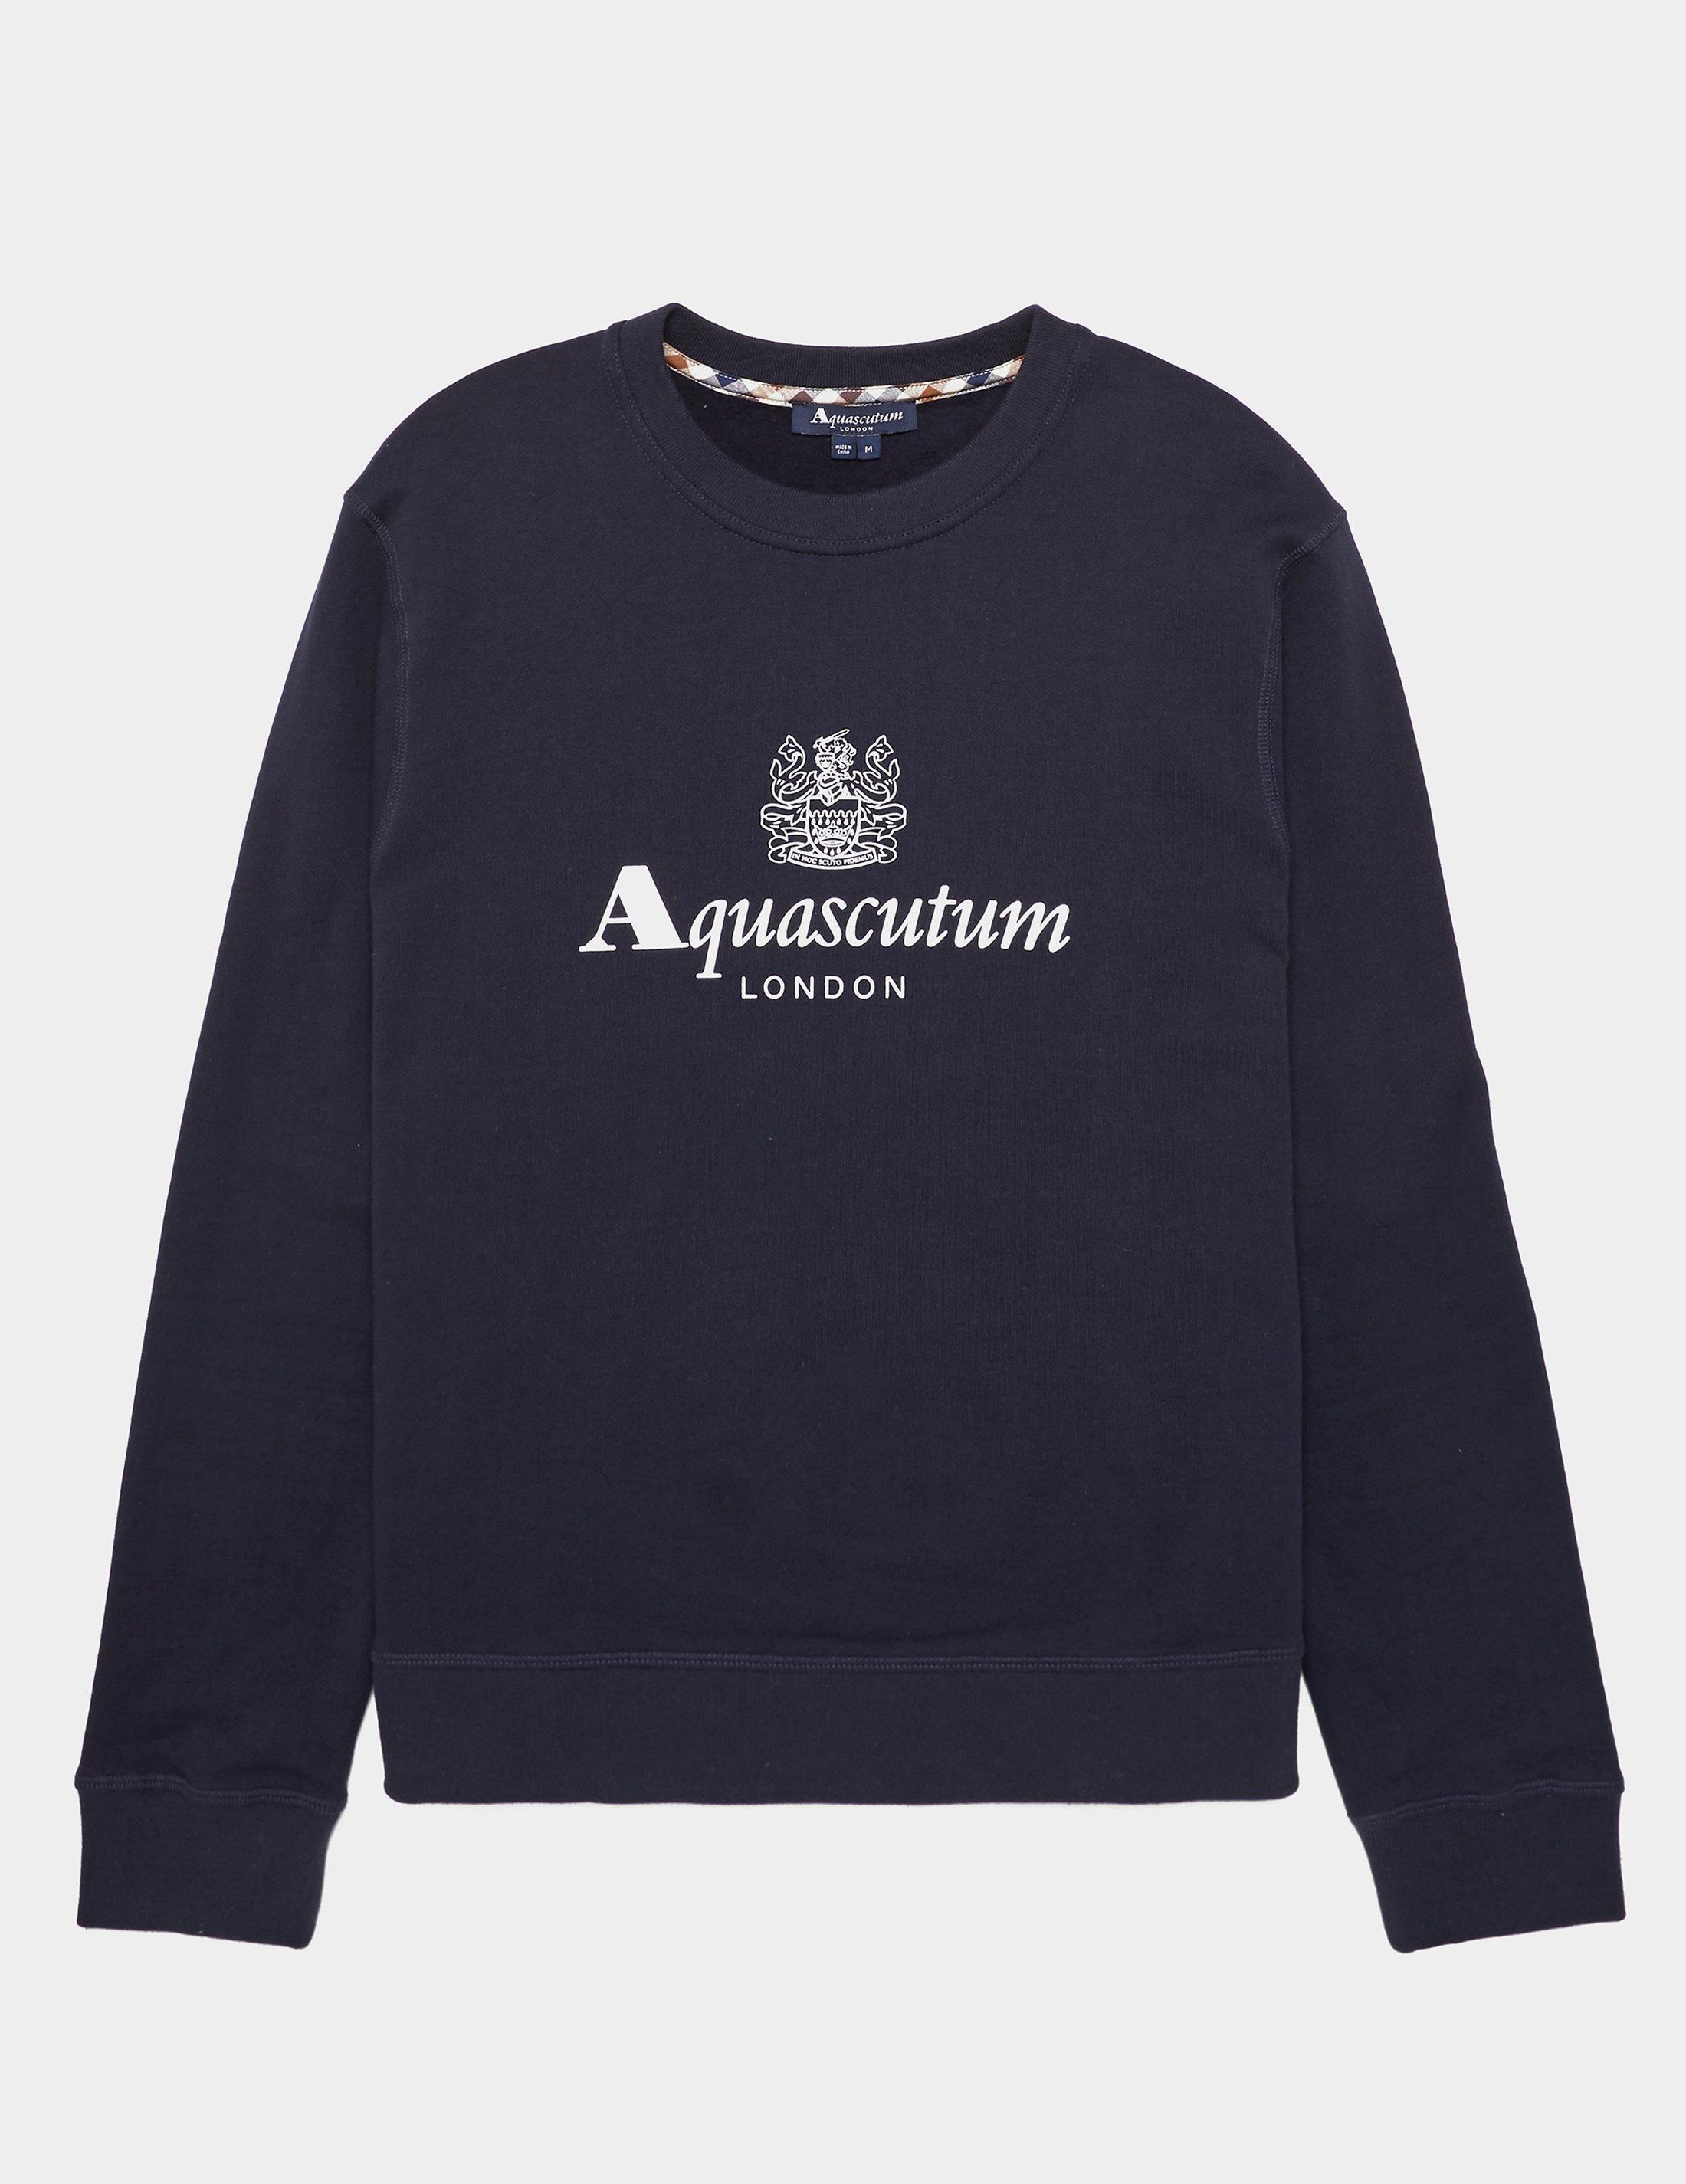 aquascutum sweatshirt